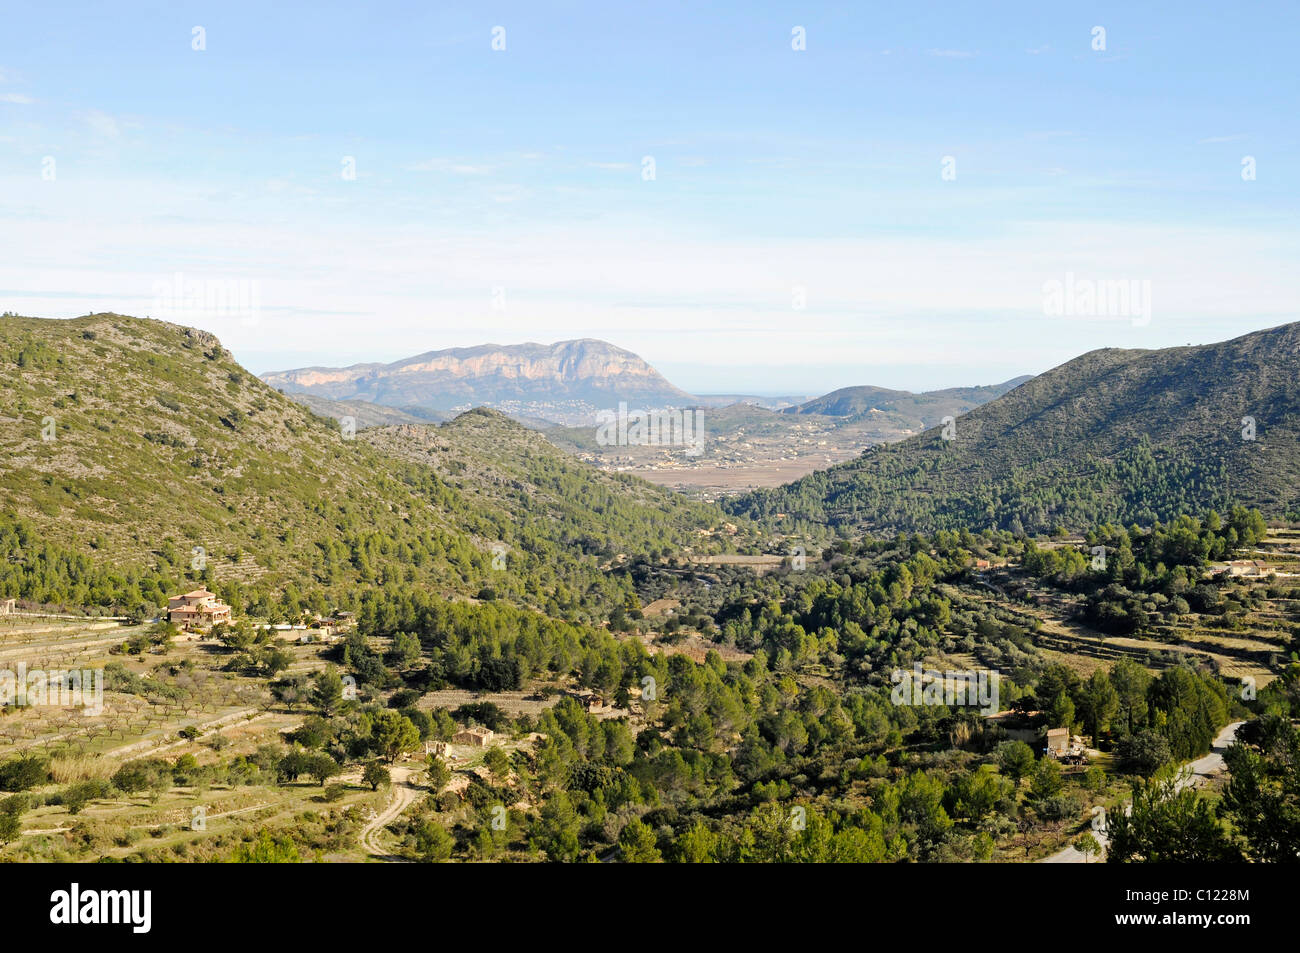 Panoramic view, landscape, Jalon, Xalon, Marina Alta, Costa Blanca, Alicante province, Spain, Europe Stock Photo